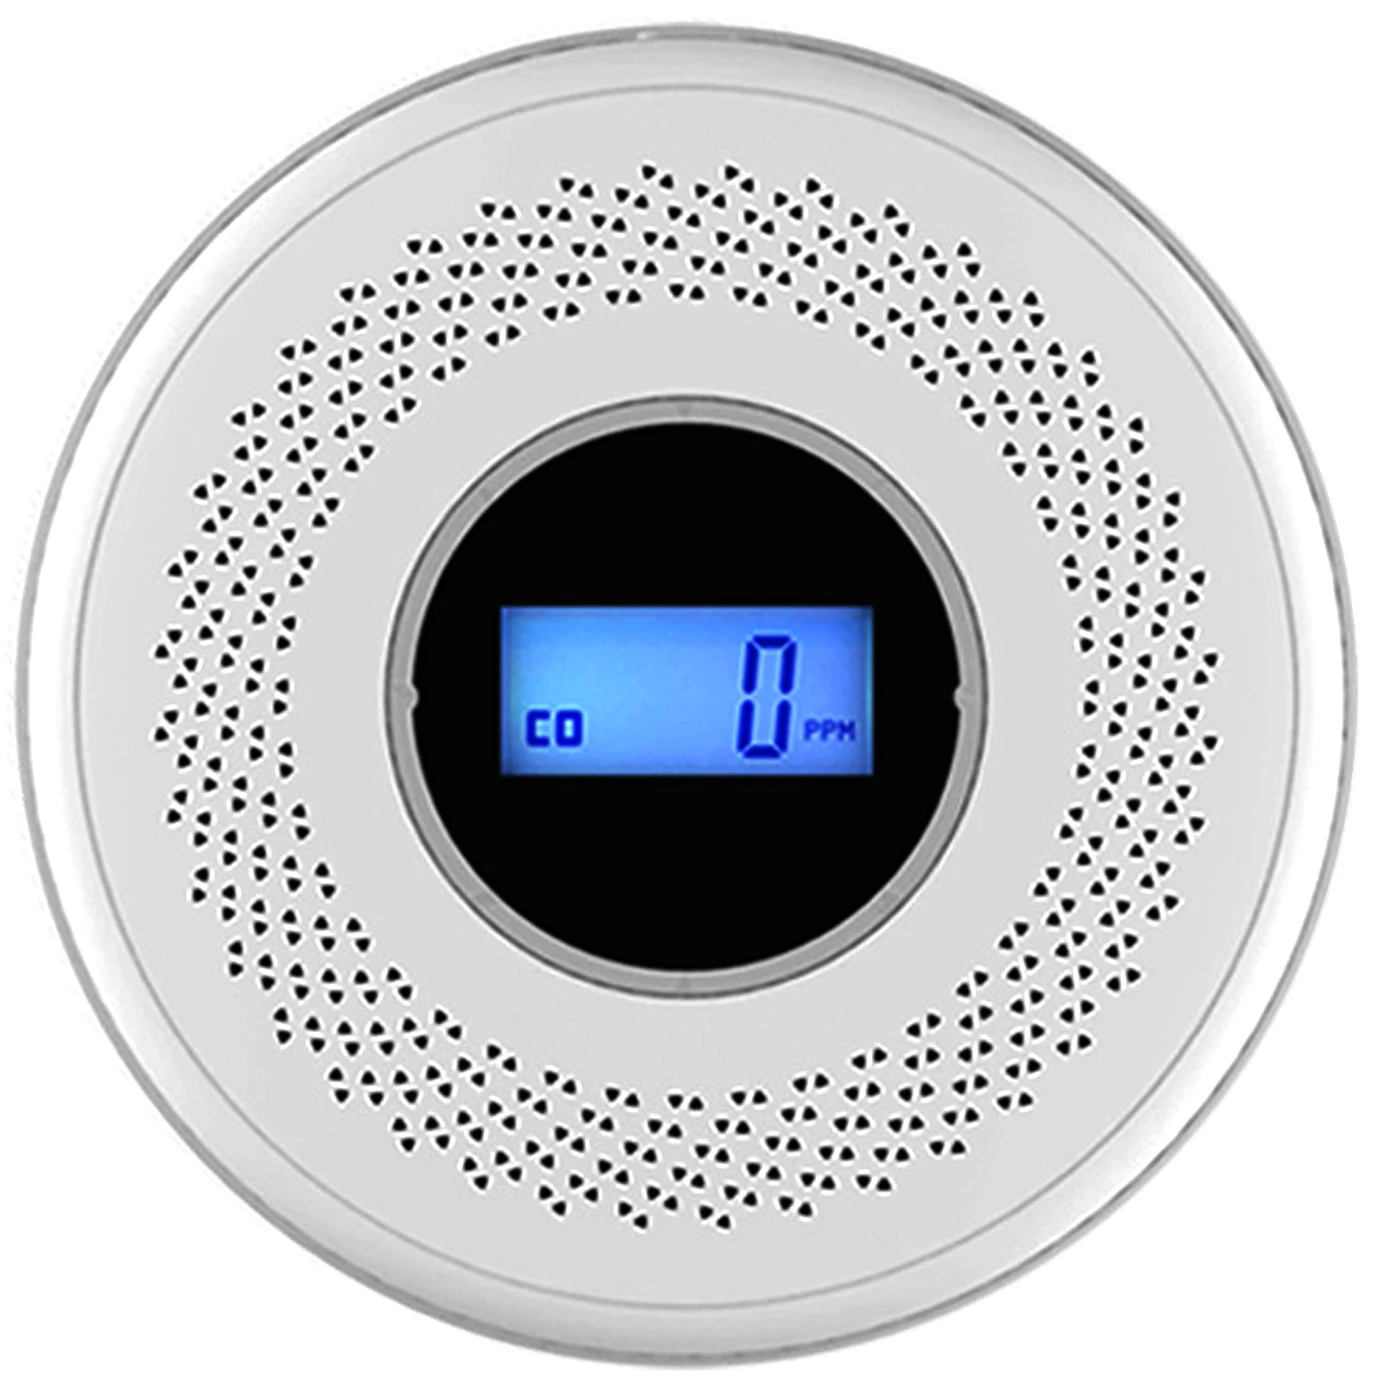 

Newest 2 in 1 LED Digital Gas Smoke Alarm Co Carbon Monoxide Detector Voice Warn Sensor Home Security Protection High Sensitive